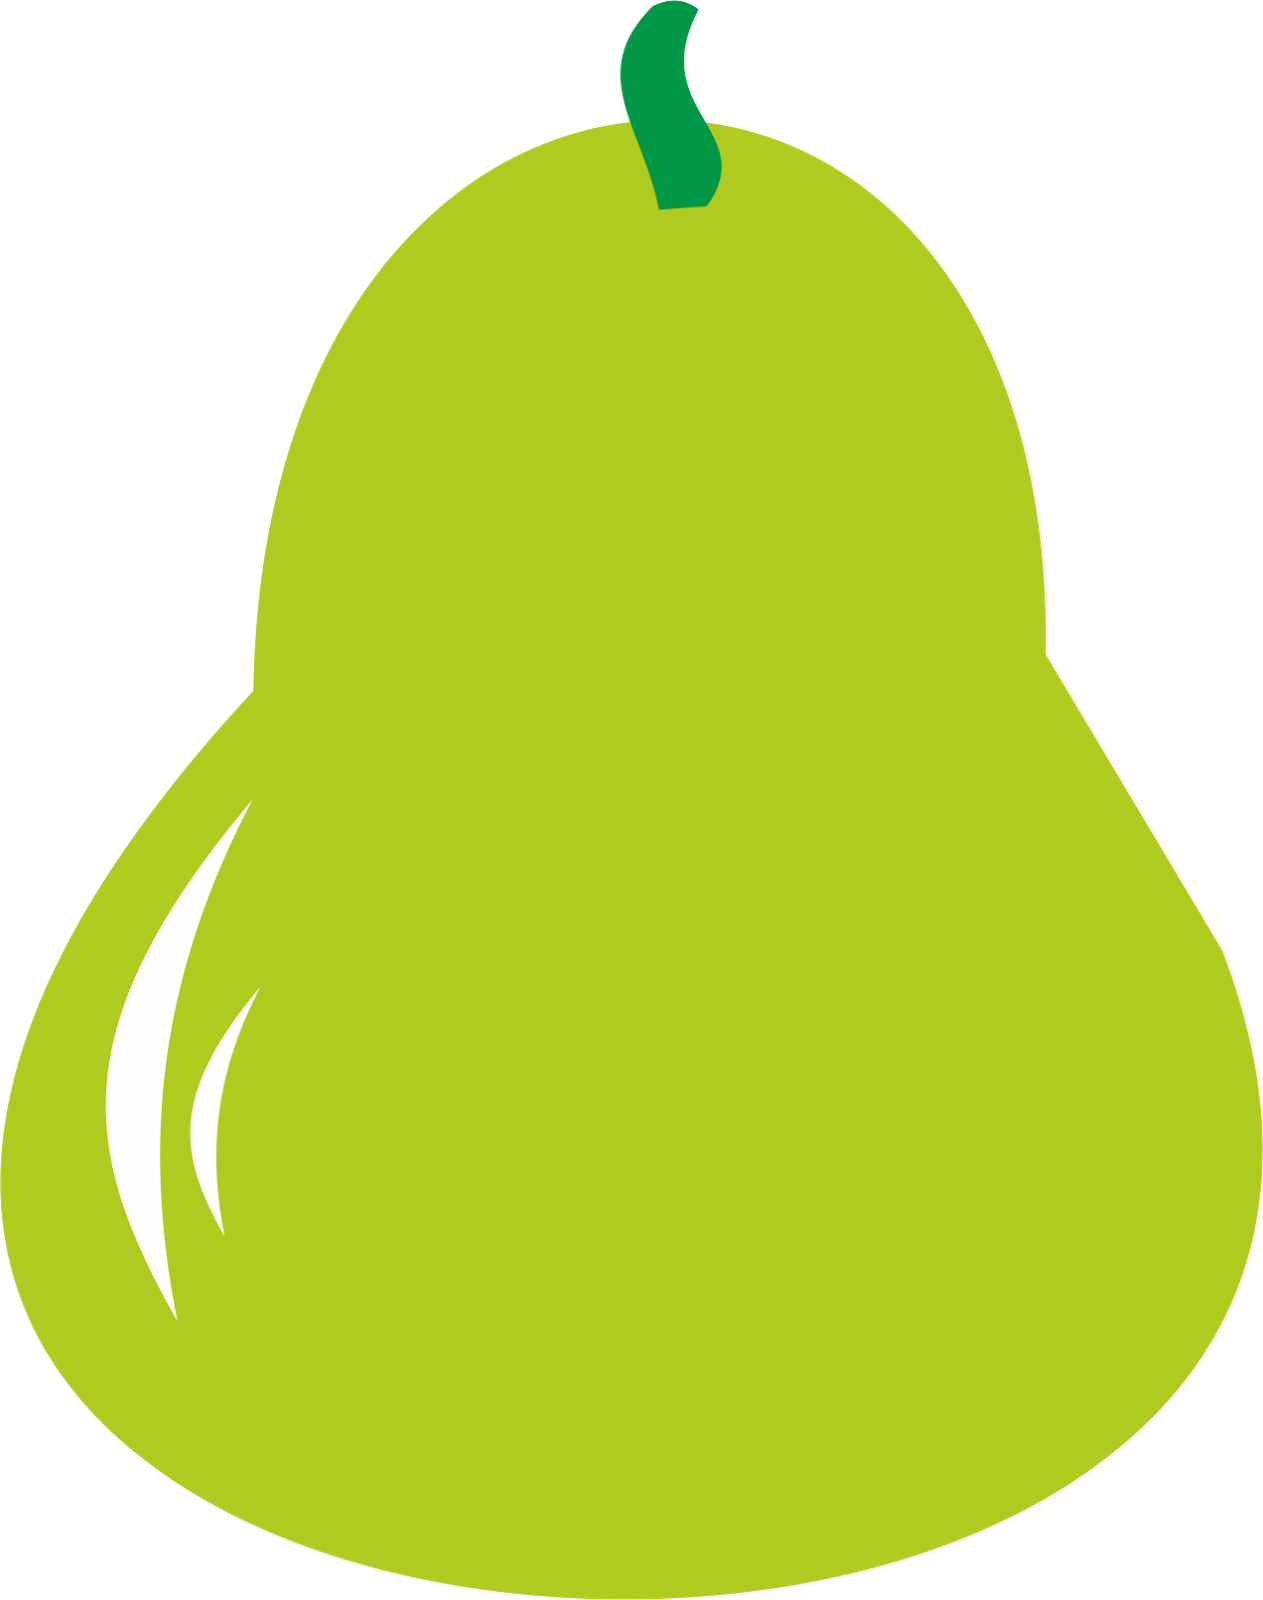 pear clipart poire